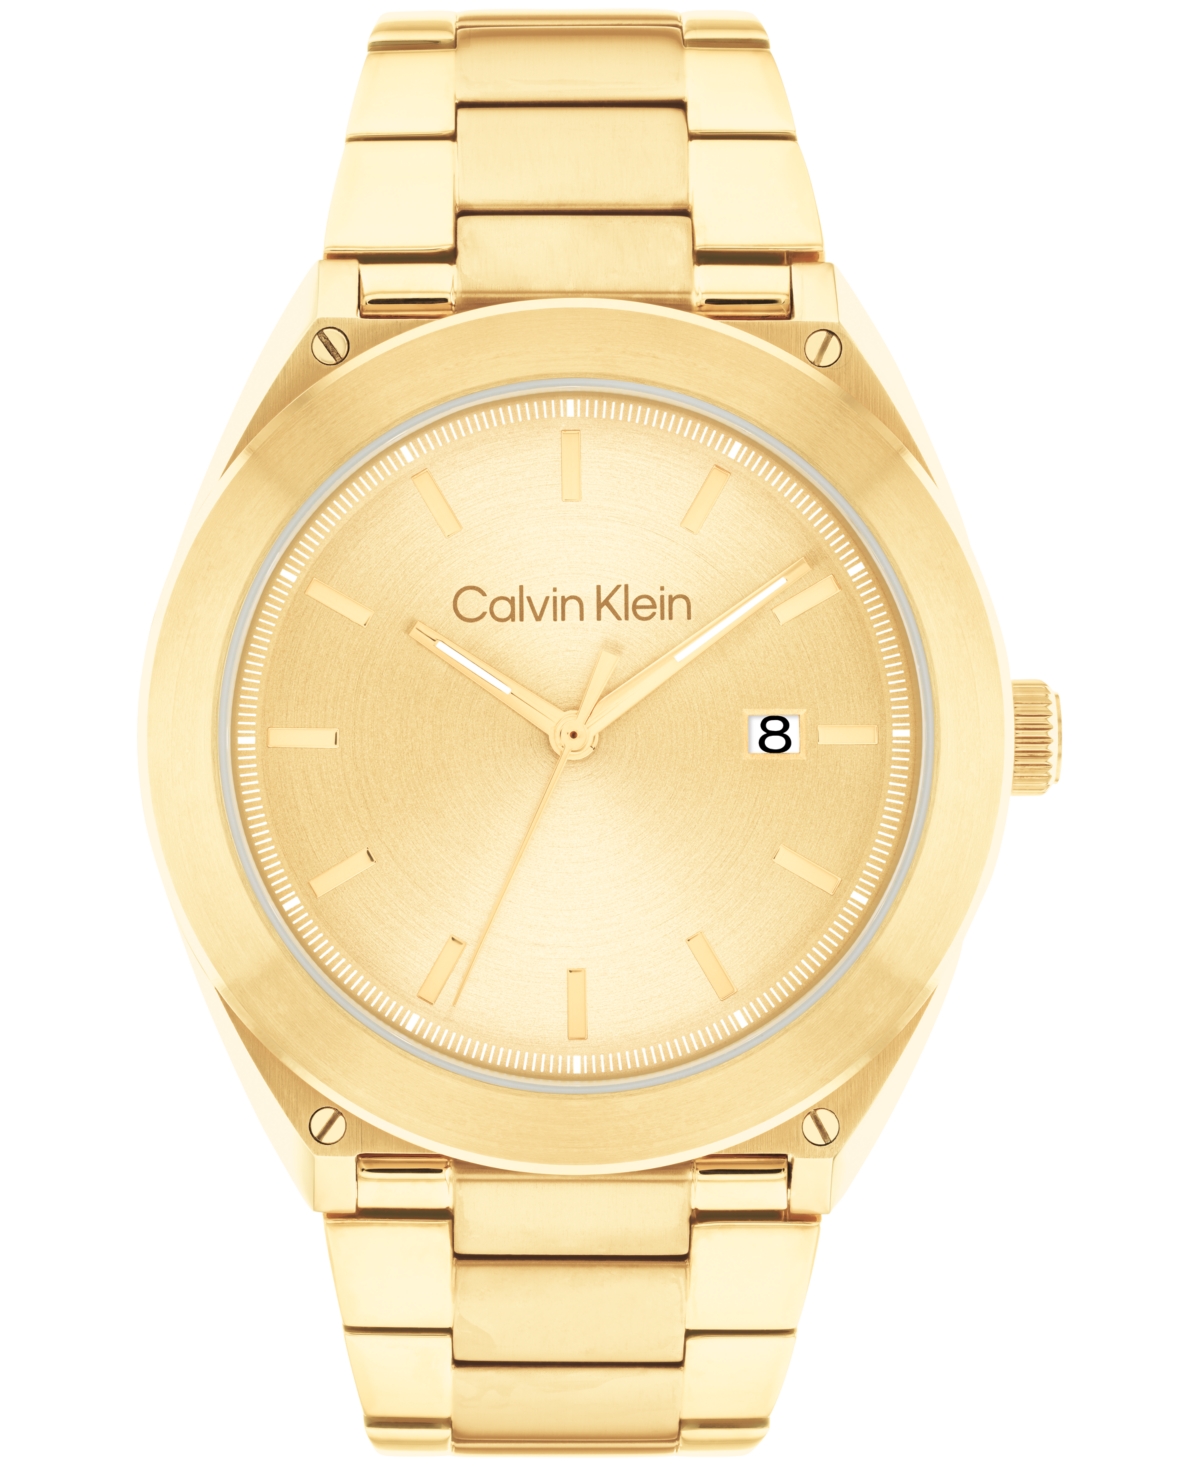 Calvin Klein Men's Gold-tone Stainless Steel Bracelet Watch 44mm